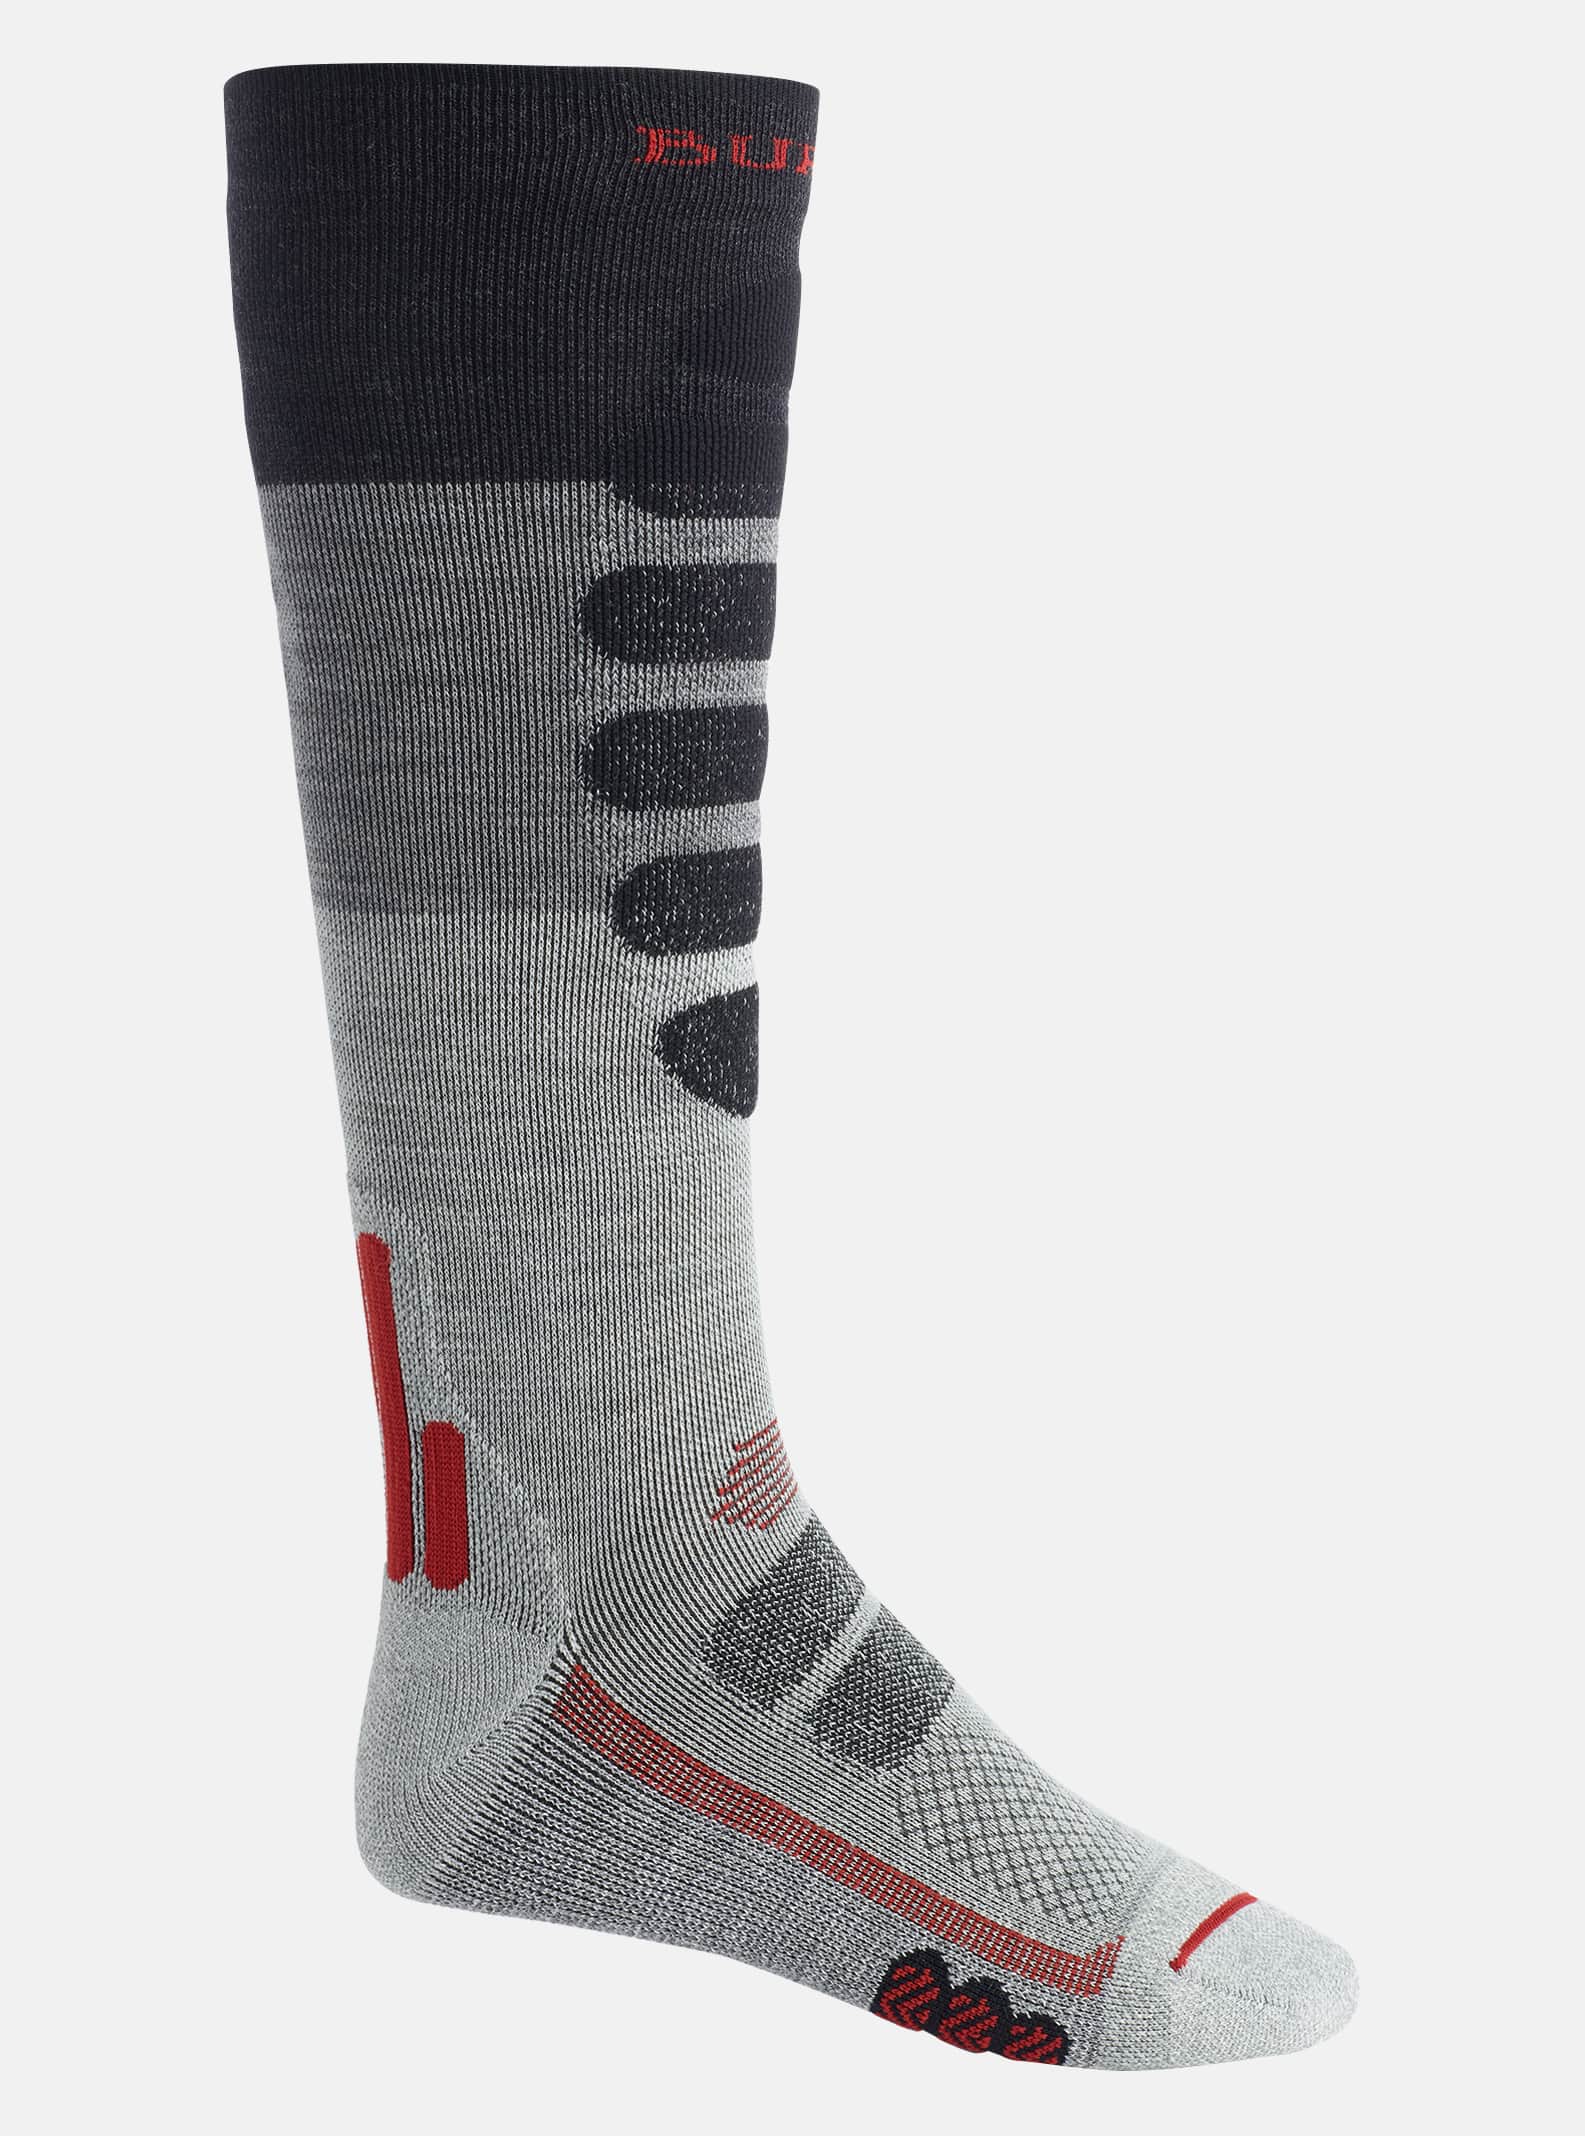 Men's Performance + Lightweight Compression Socks